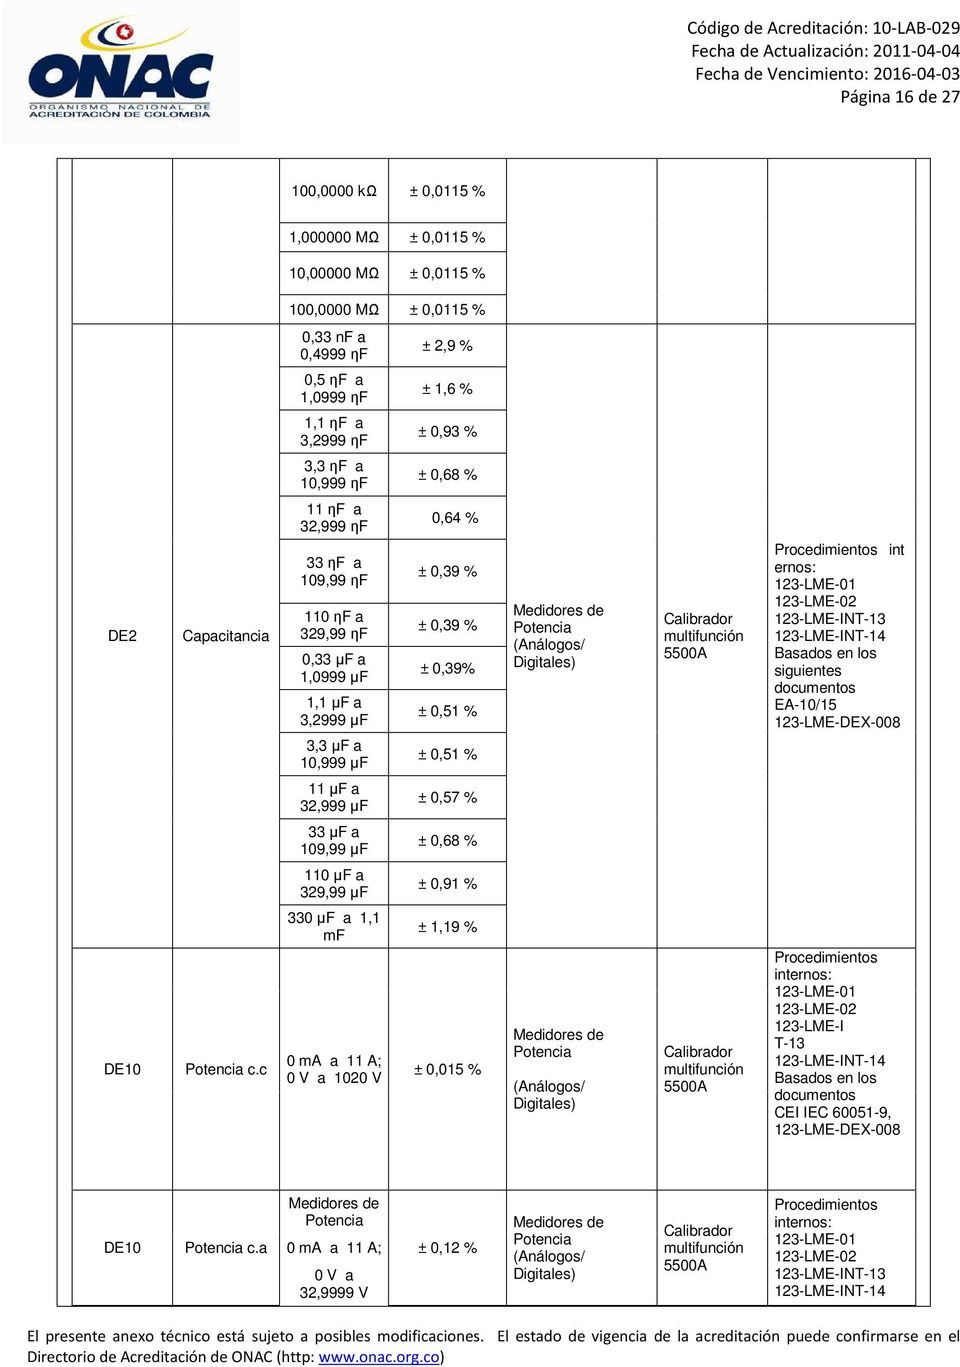 Medidores de Potencia int ernos: 123-LME-INT-13 123-LME-INT-14 EA-10/15 11 µf a 32,999 µf ± 0,57 % 33 µf a 109,99 µf ± 0,68 % 110 µf a 329,99 µf ± 0,91 % DE10 Potencia c.